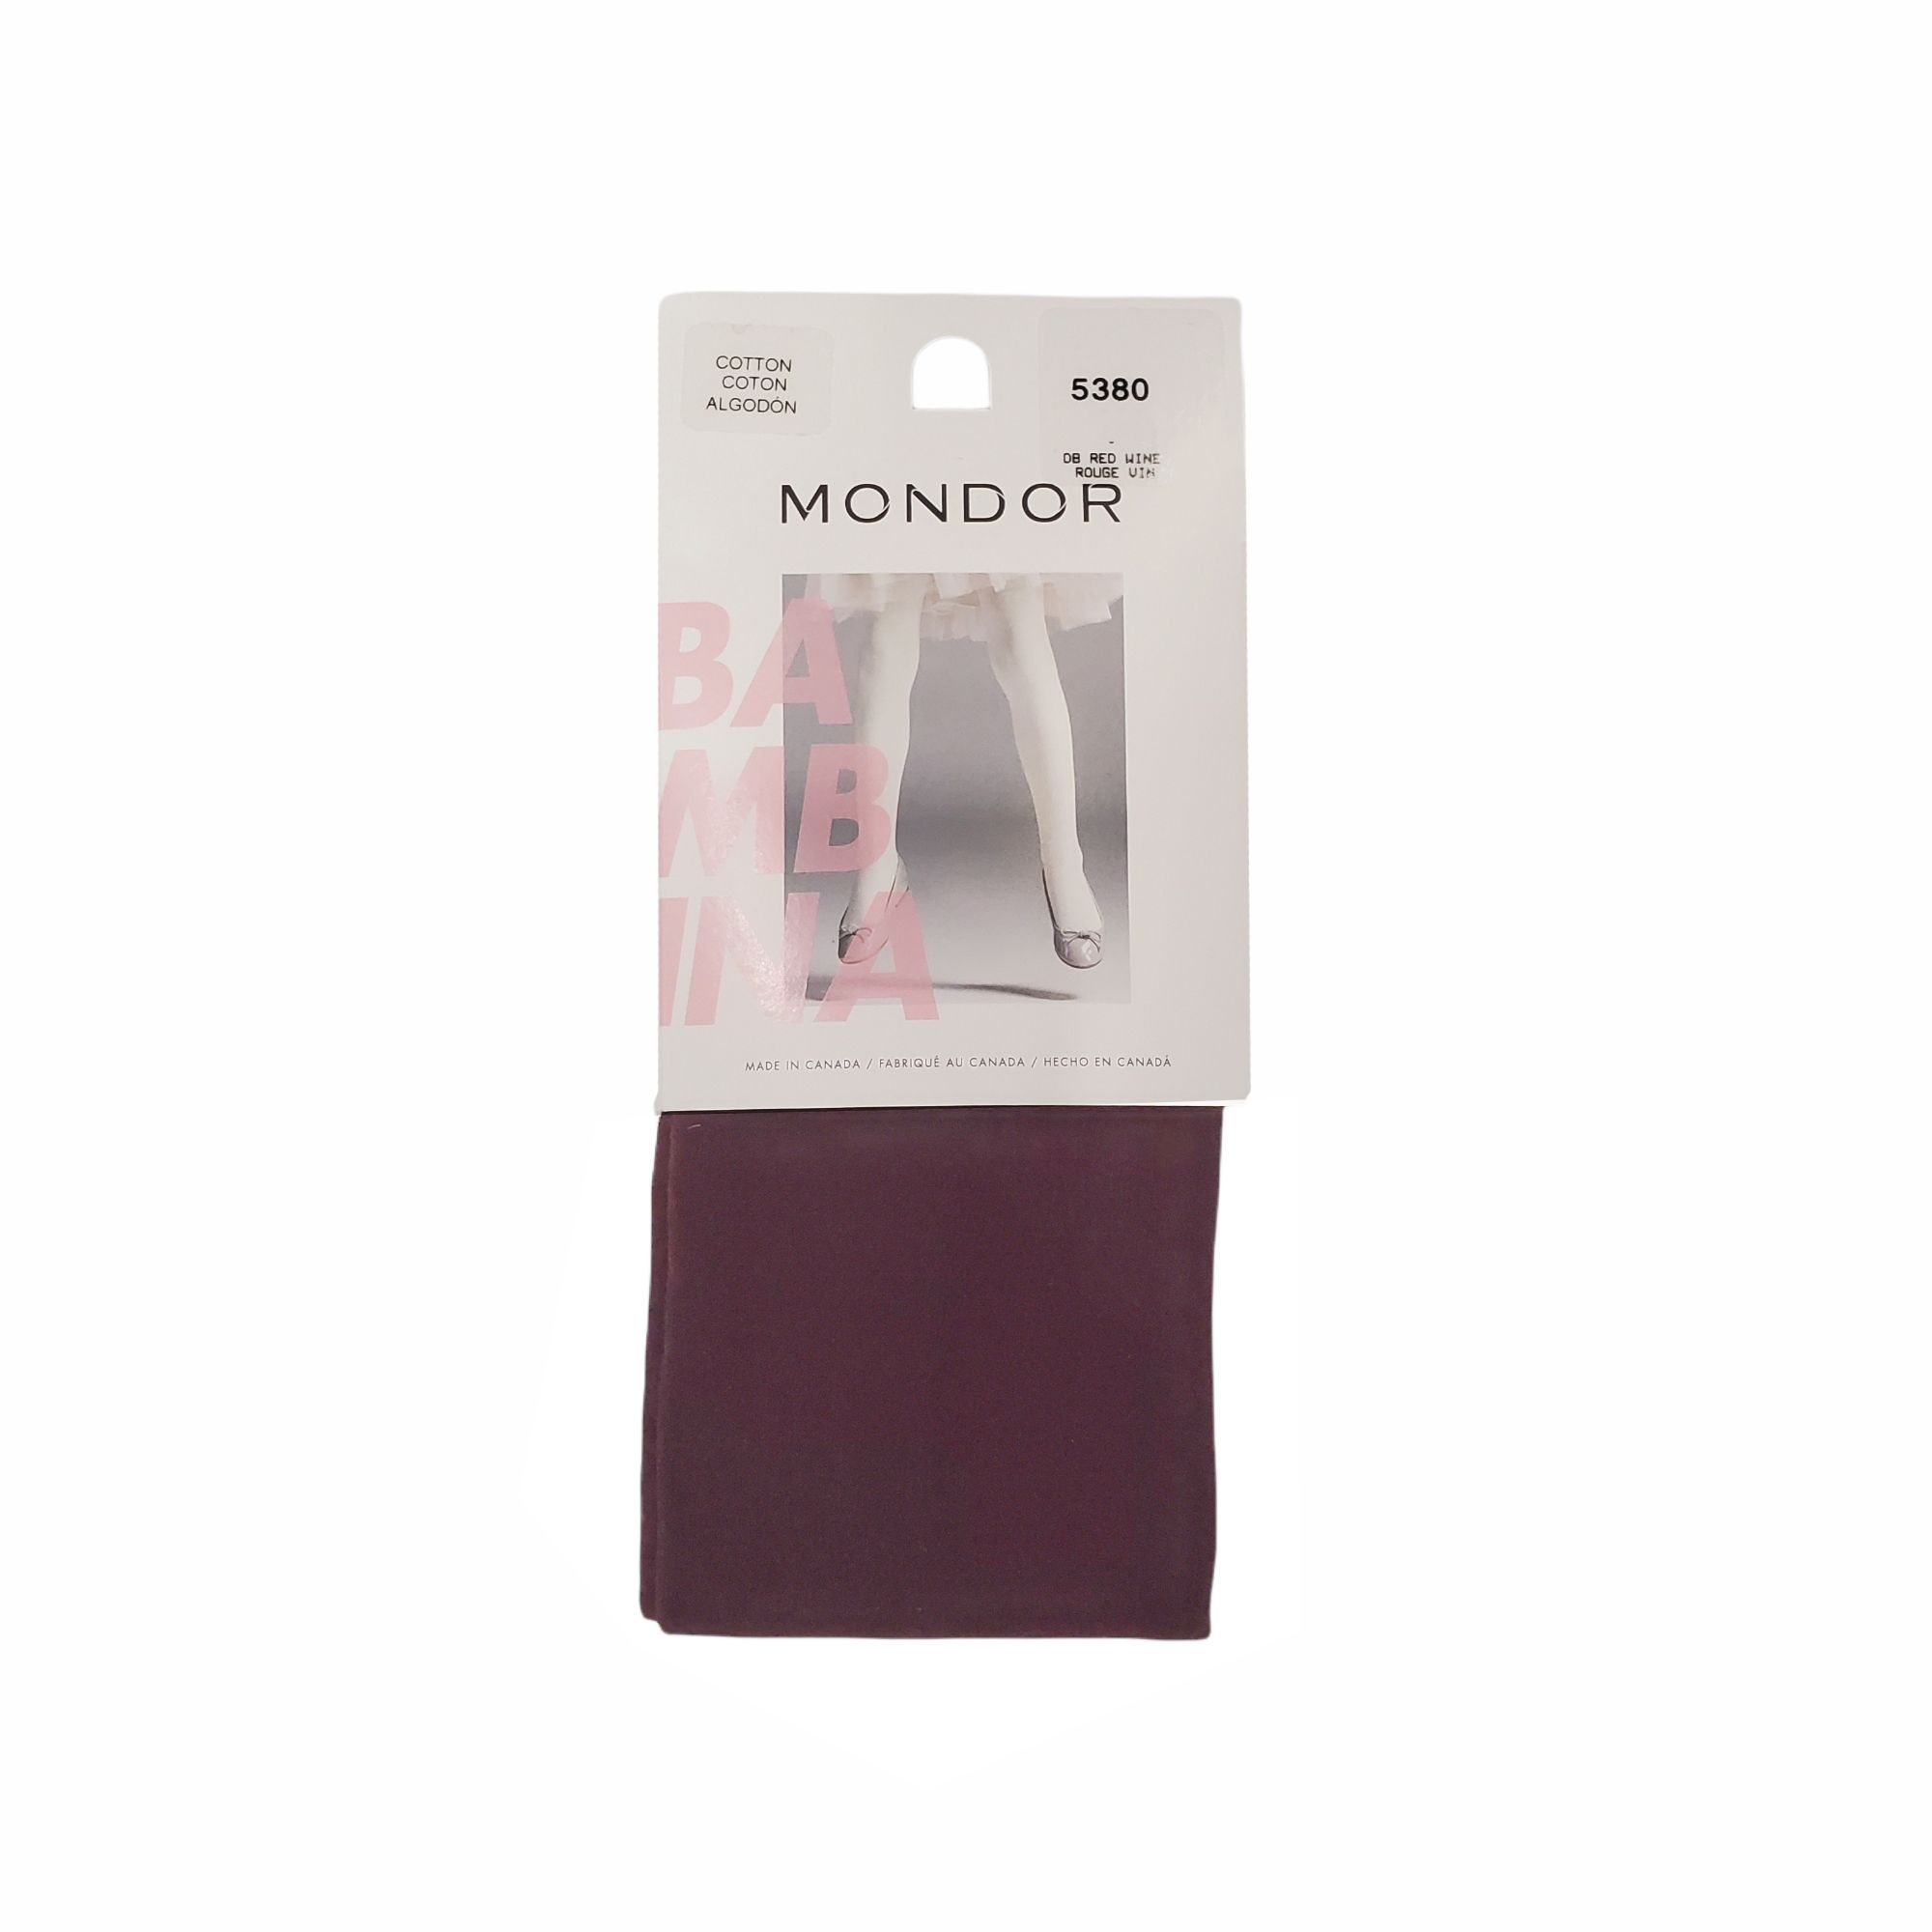 Mondor tights - Burgundy, Mouton Noir